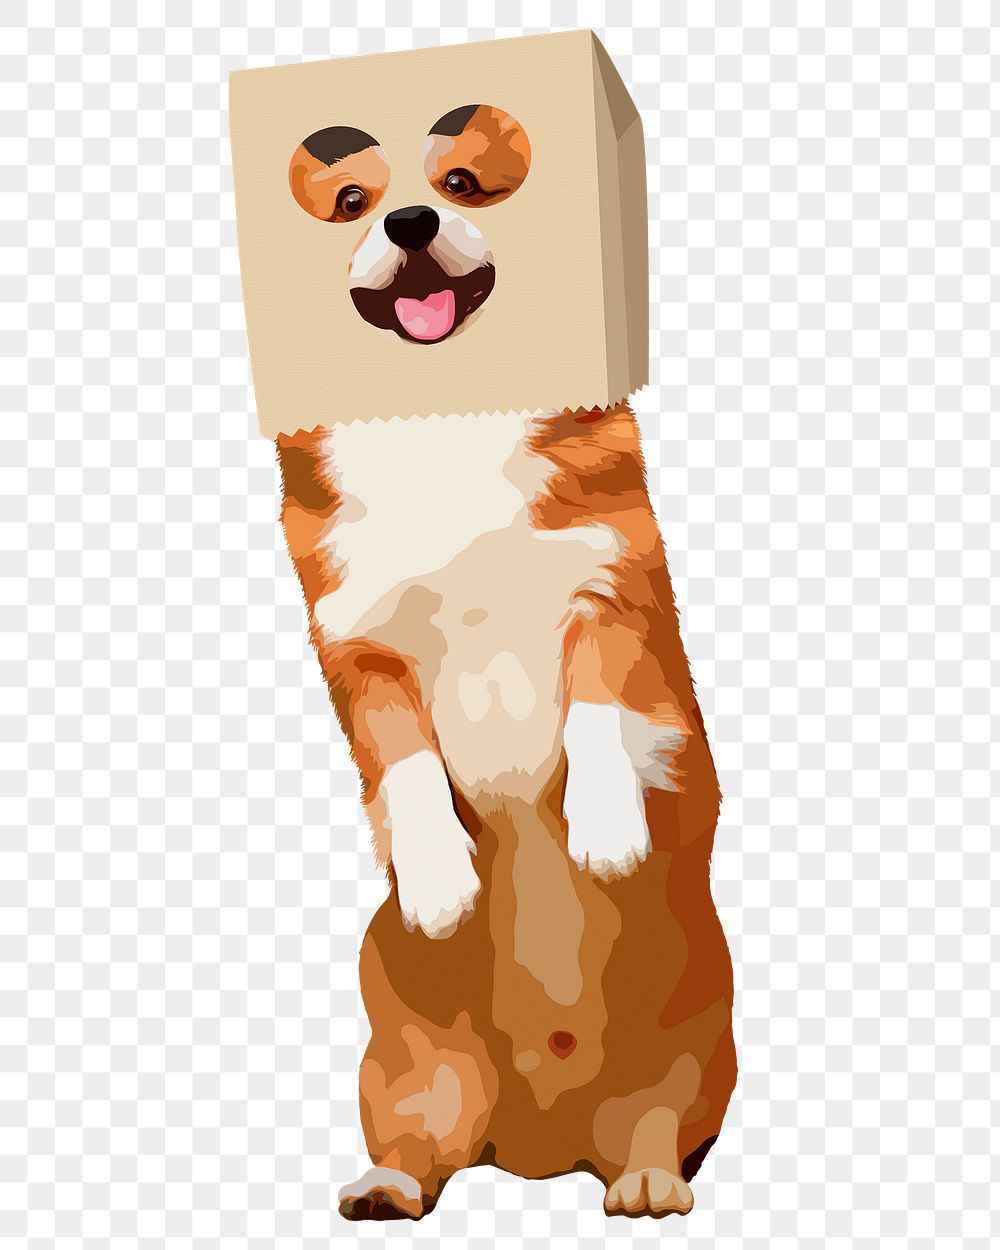 Cute Corgi dog png sticker, transparent background